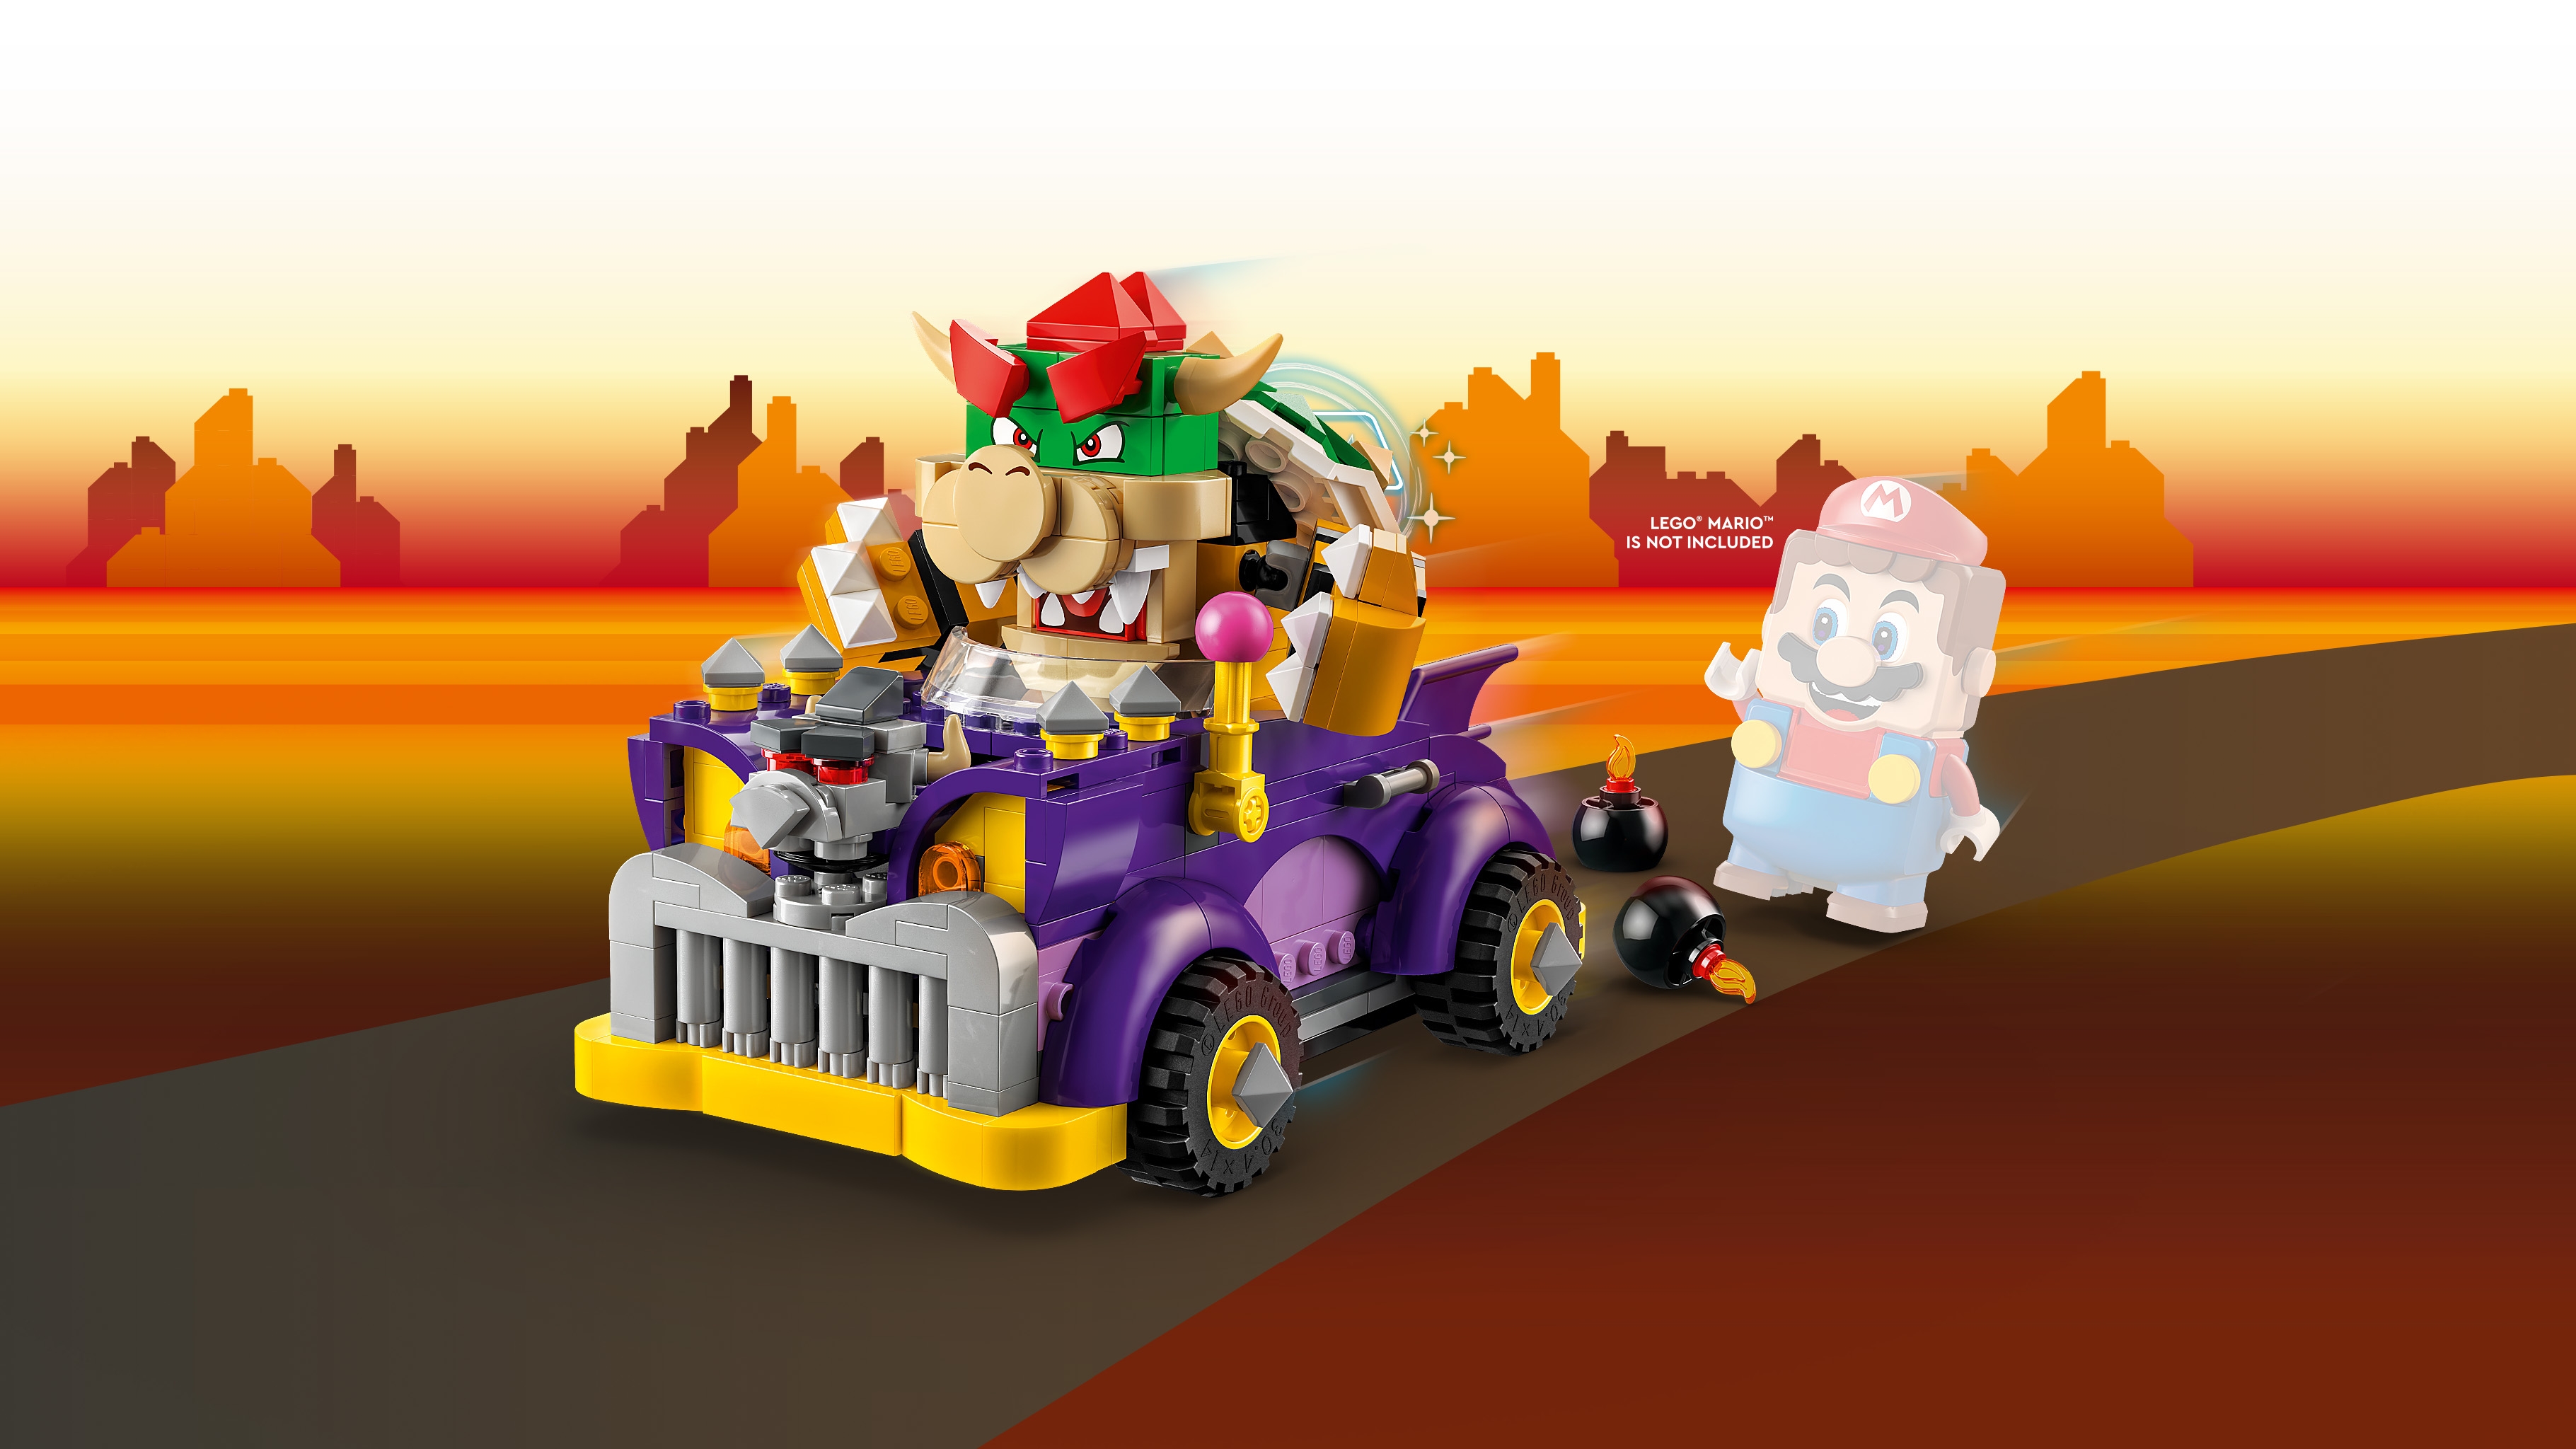 LEGO Super Mario Bowser's Muscle Car Expansion Set